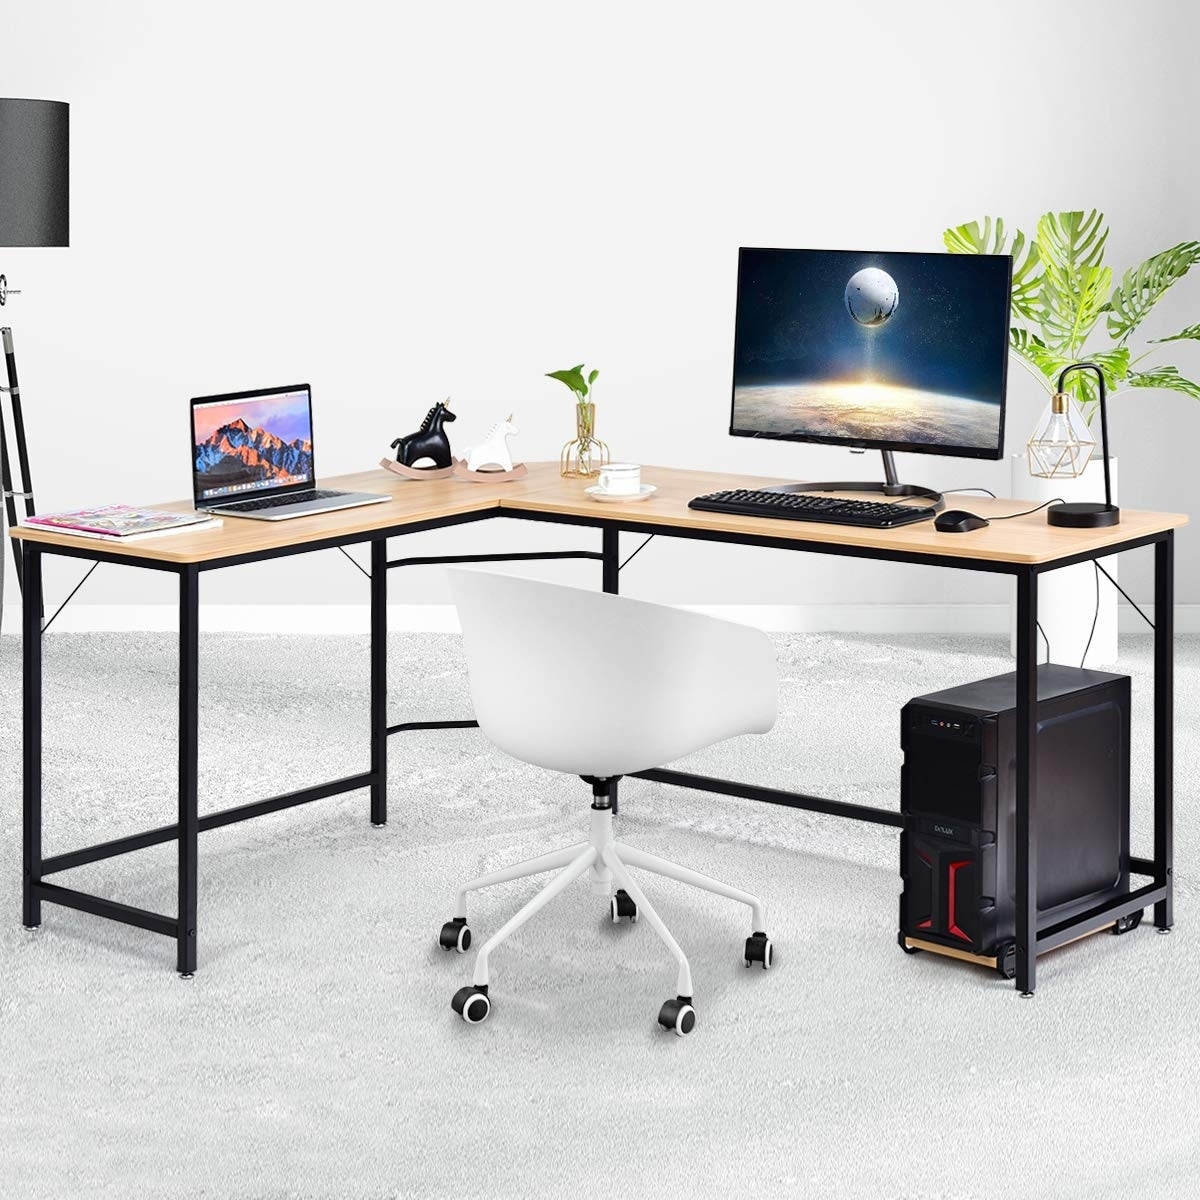 Details about   Office L-Shaped Gaming Computer Desk Corner PC Laptop Table Home Bookshelves 53" 